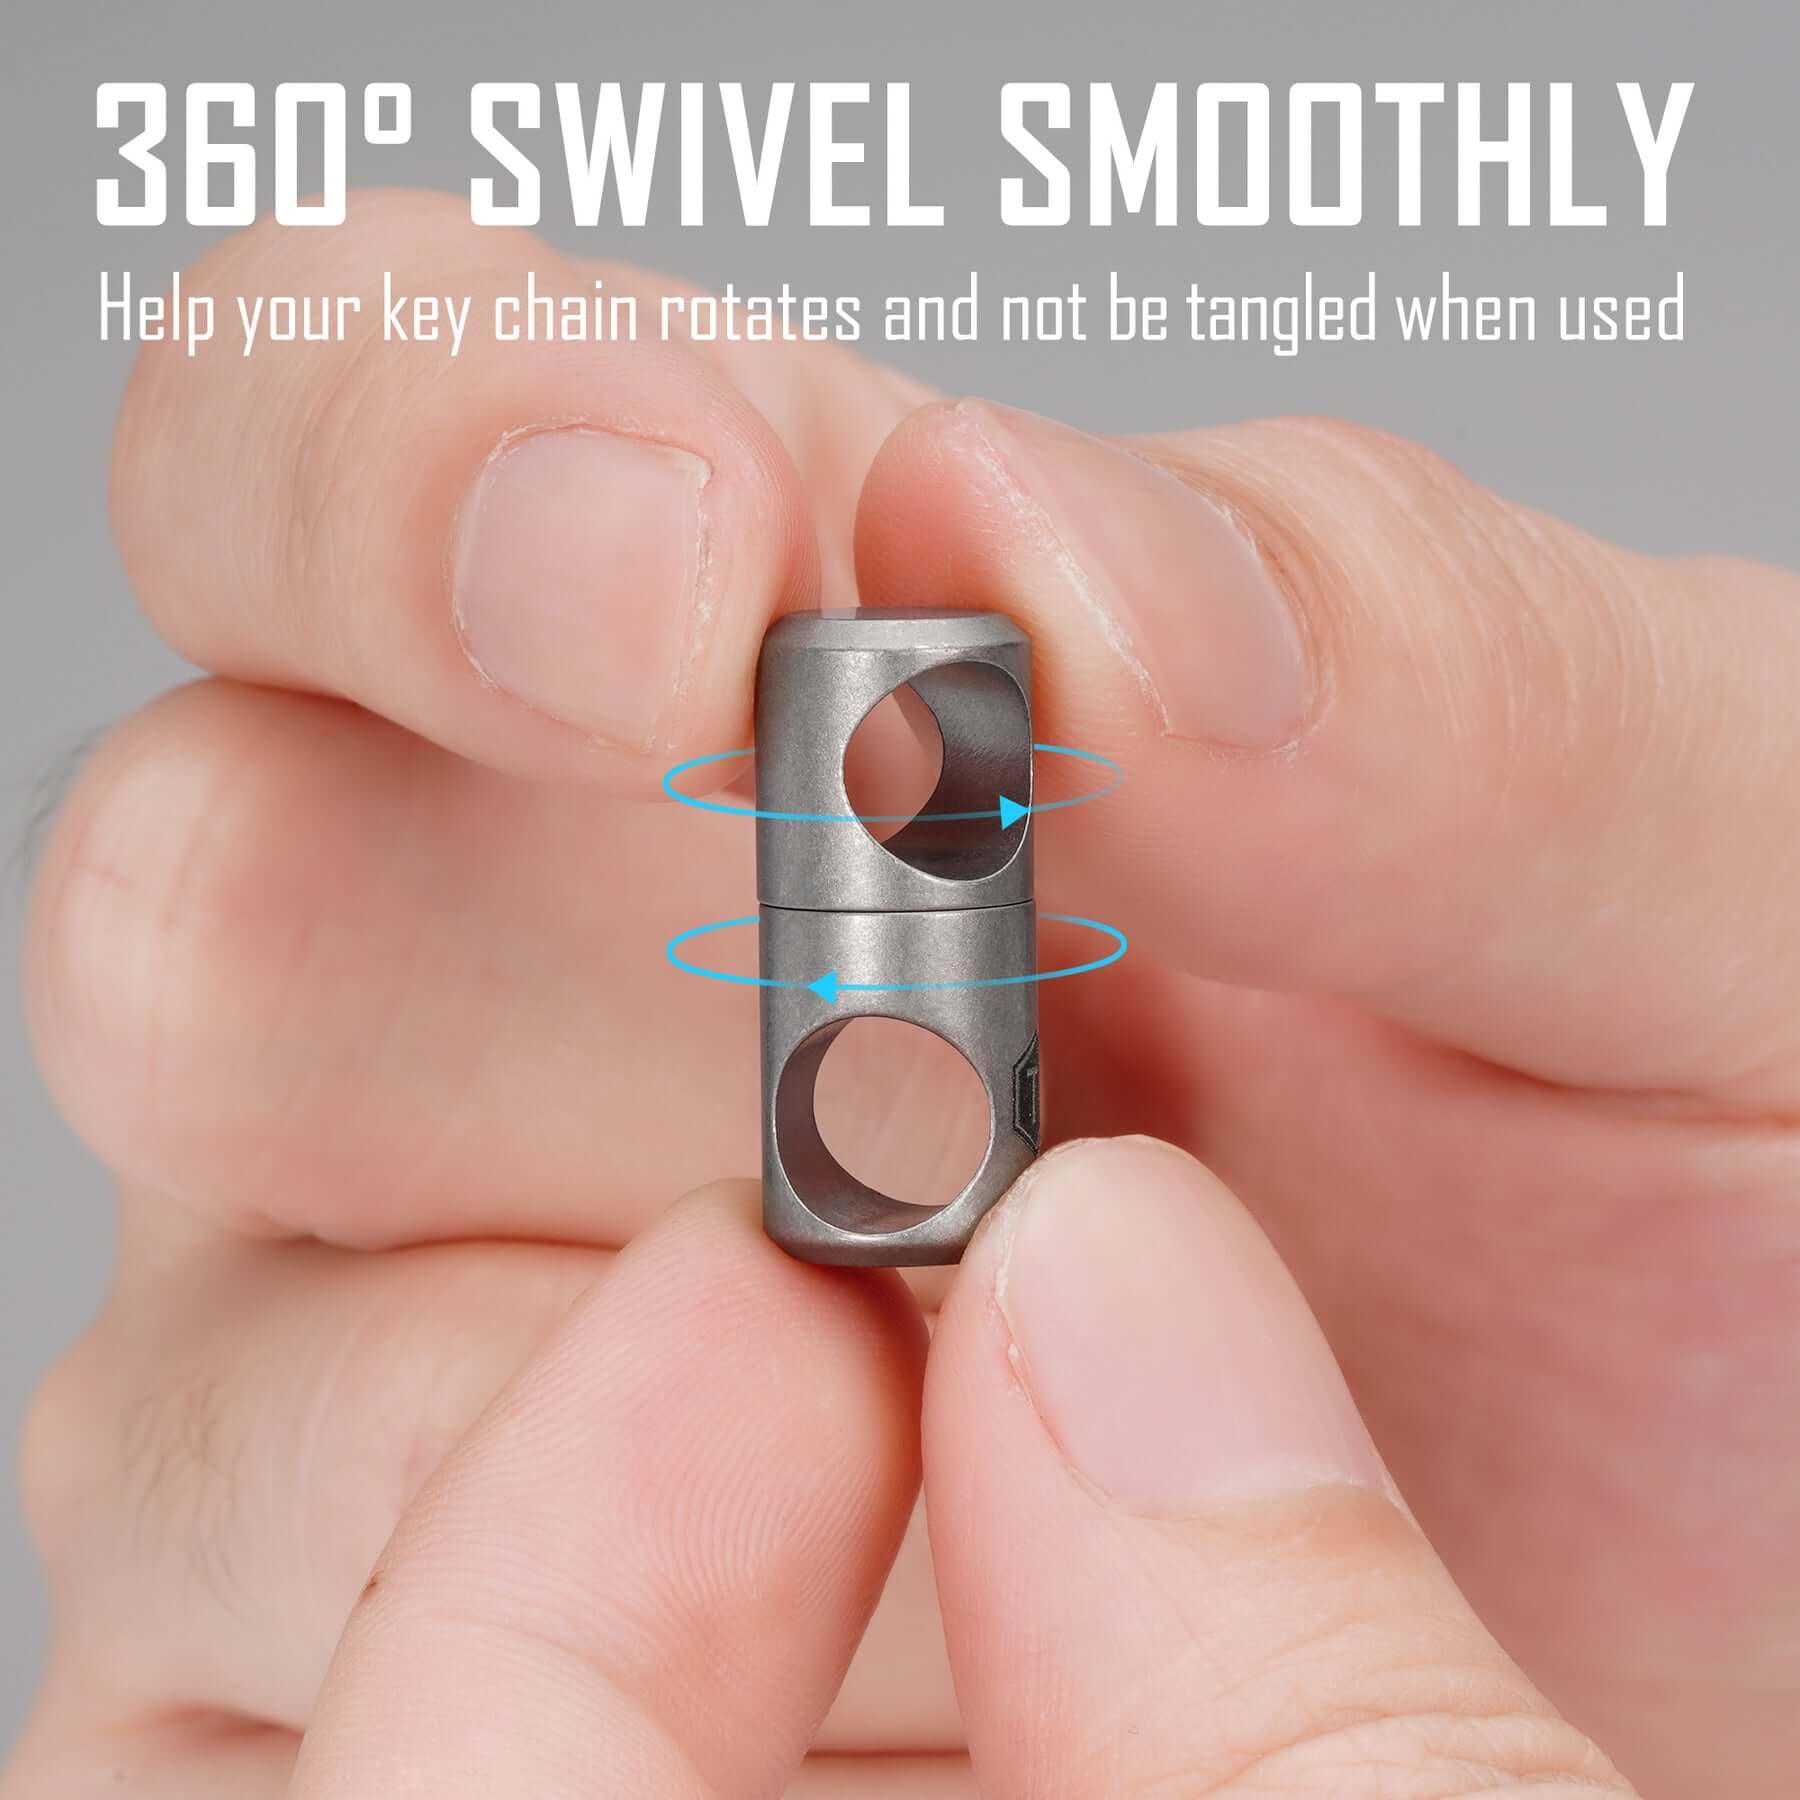 Titanium alloy capsule 360°rotating car keychain key ring